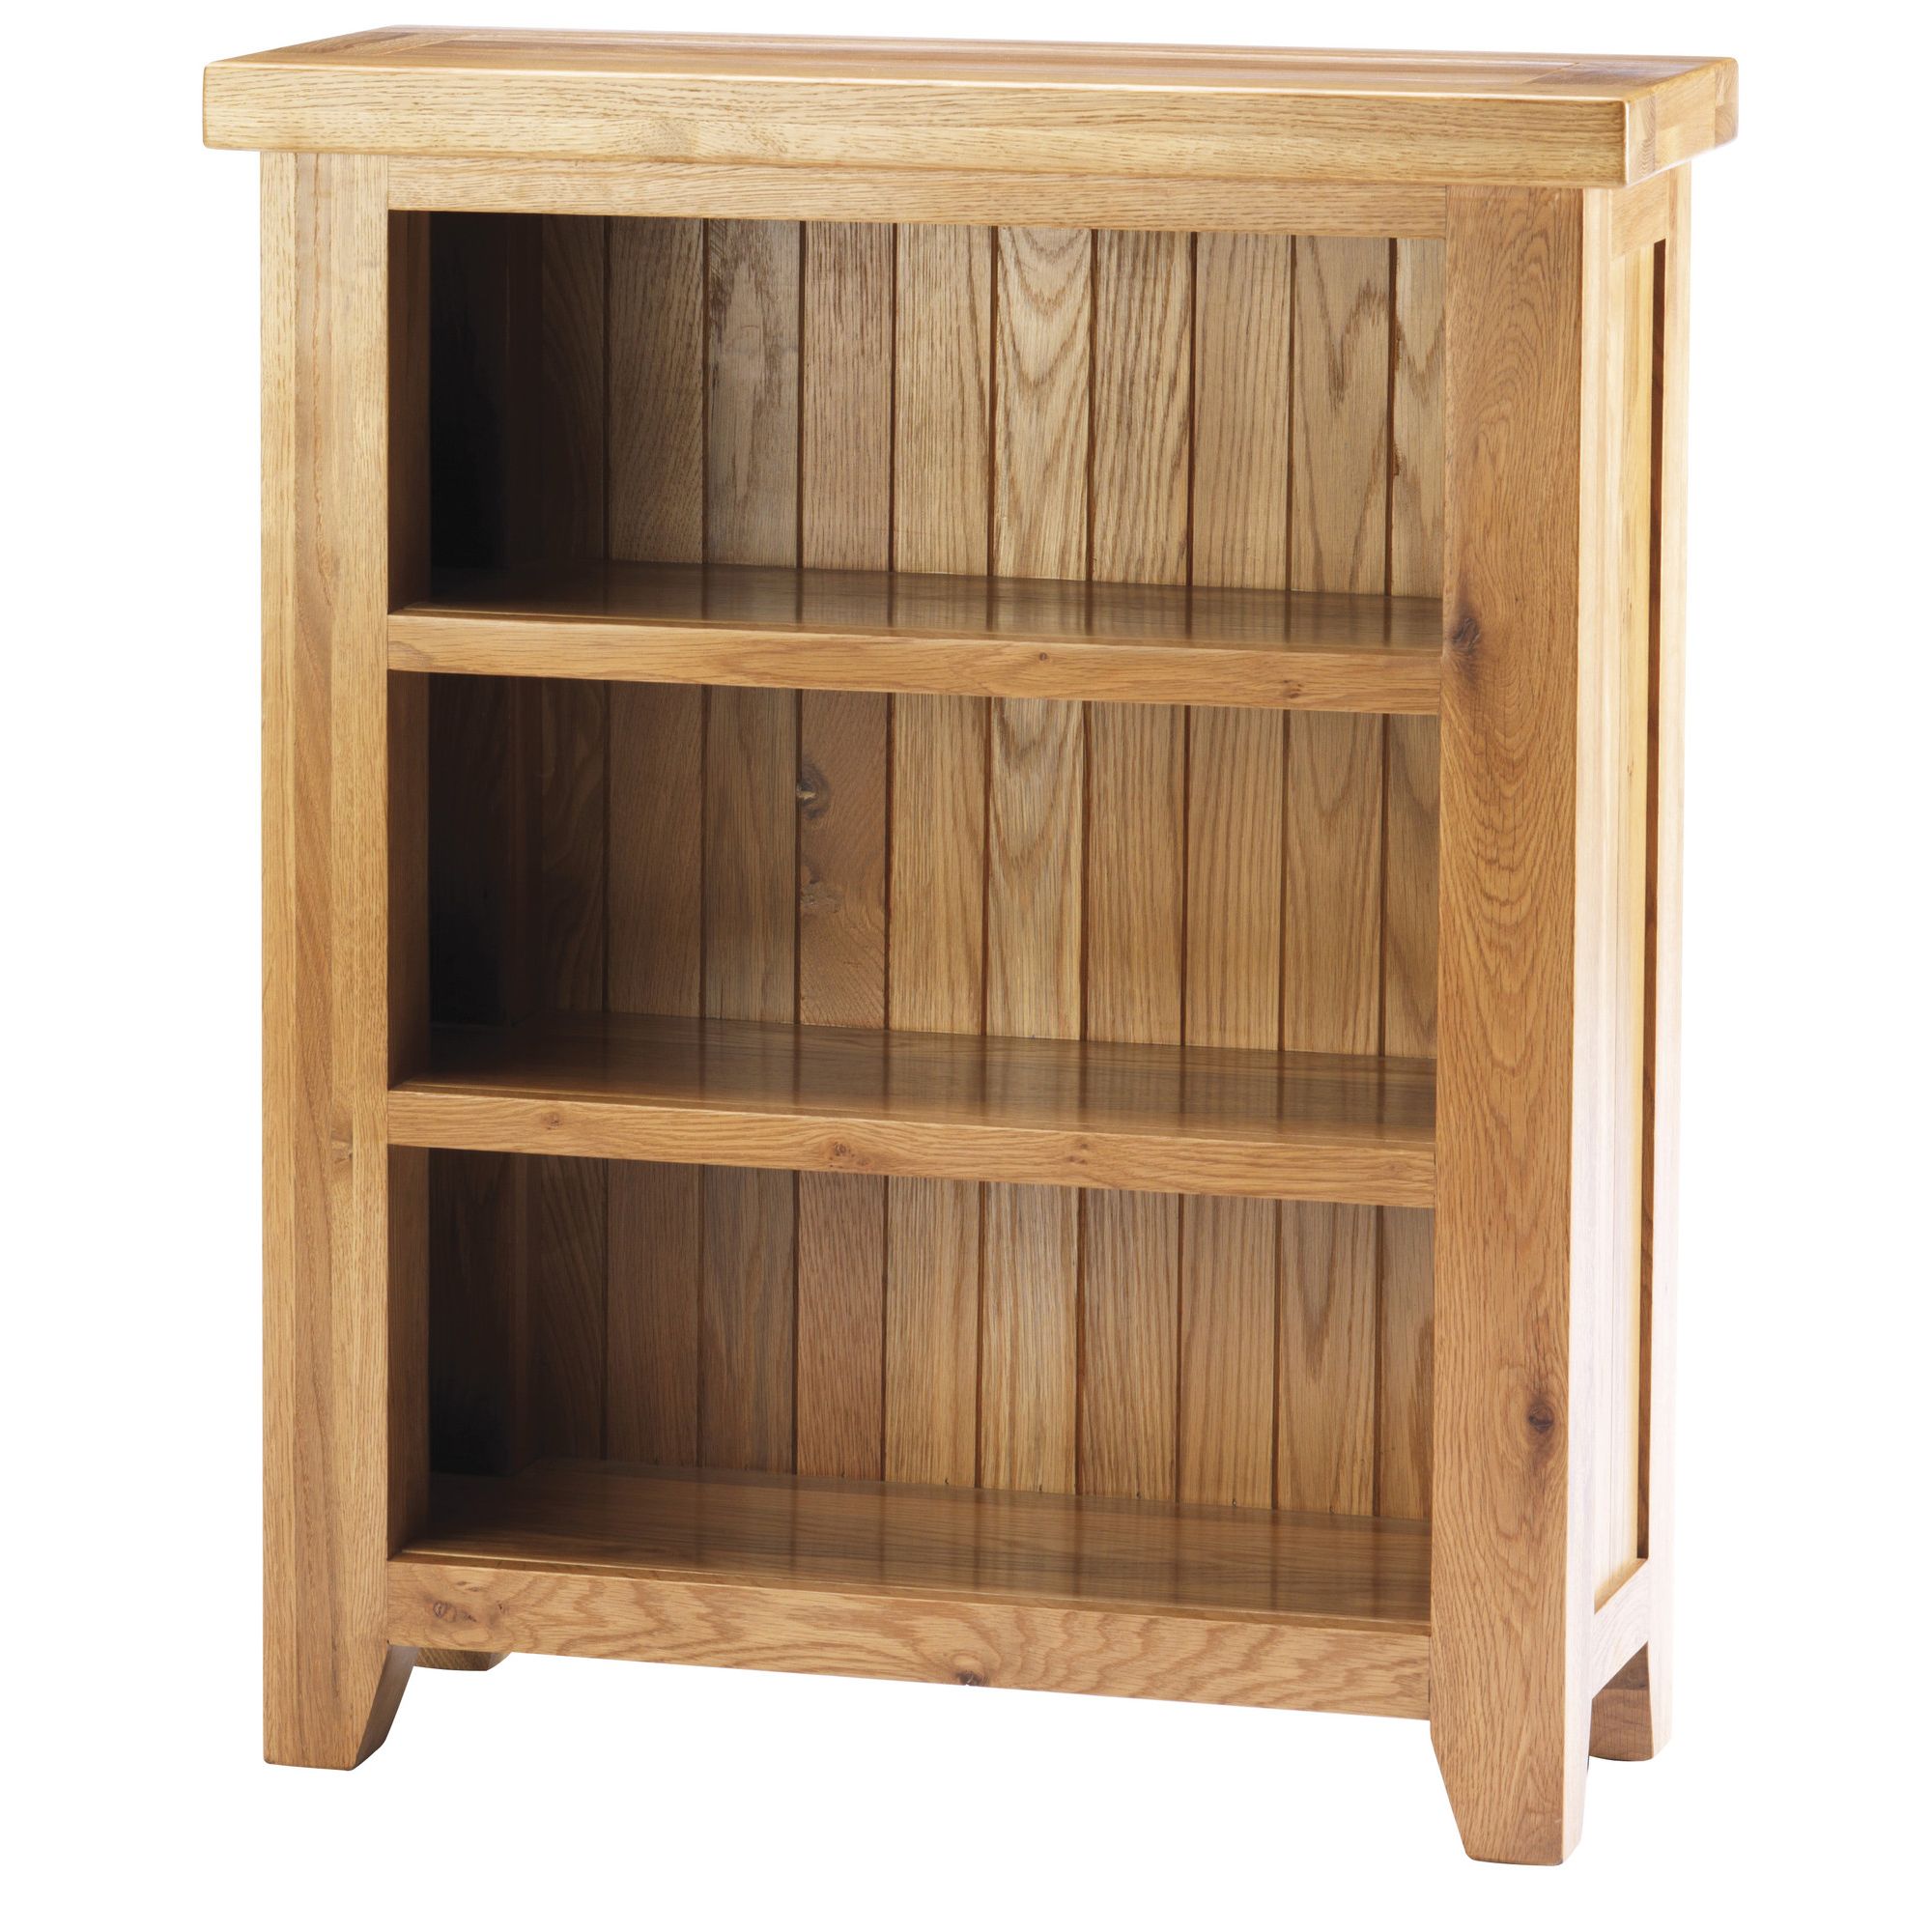 Thorndon Taunton Small Bookcase in Medium Oak at Tesco Direct